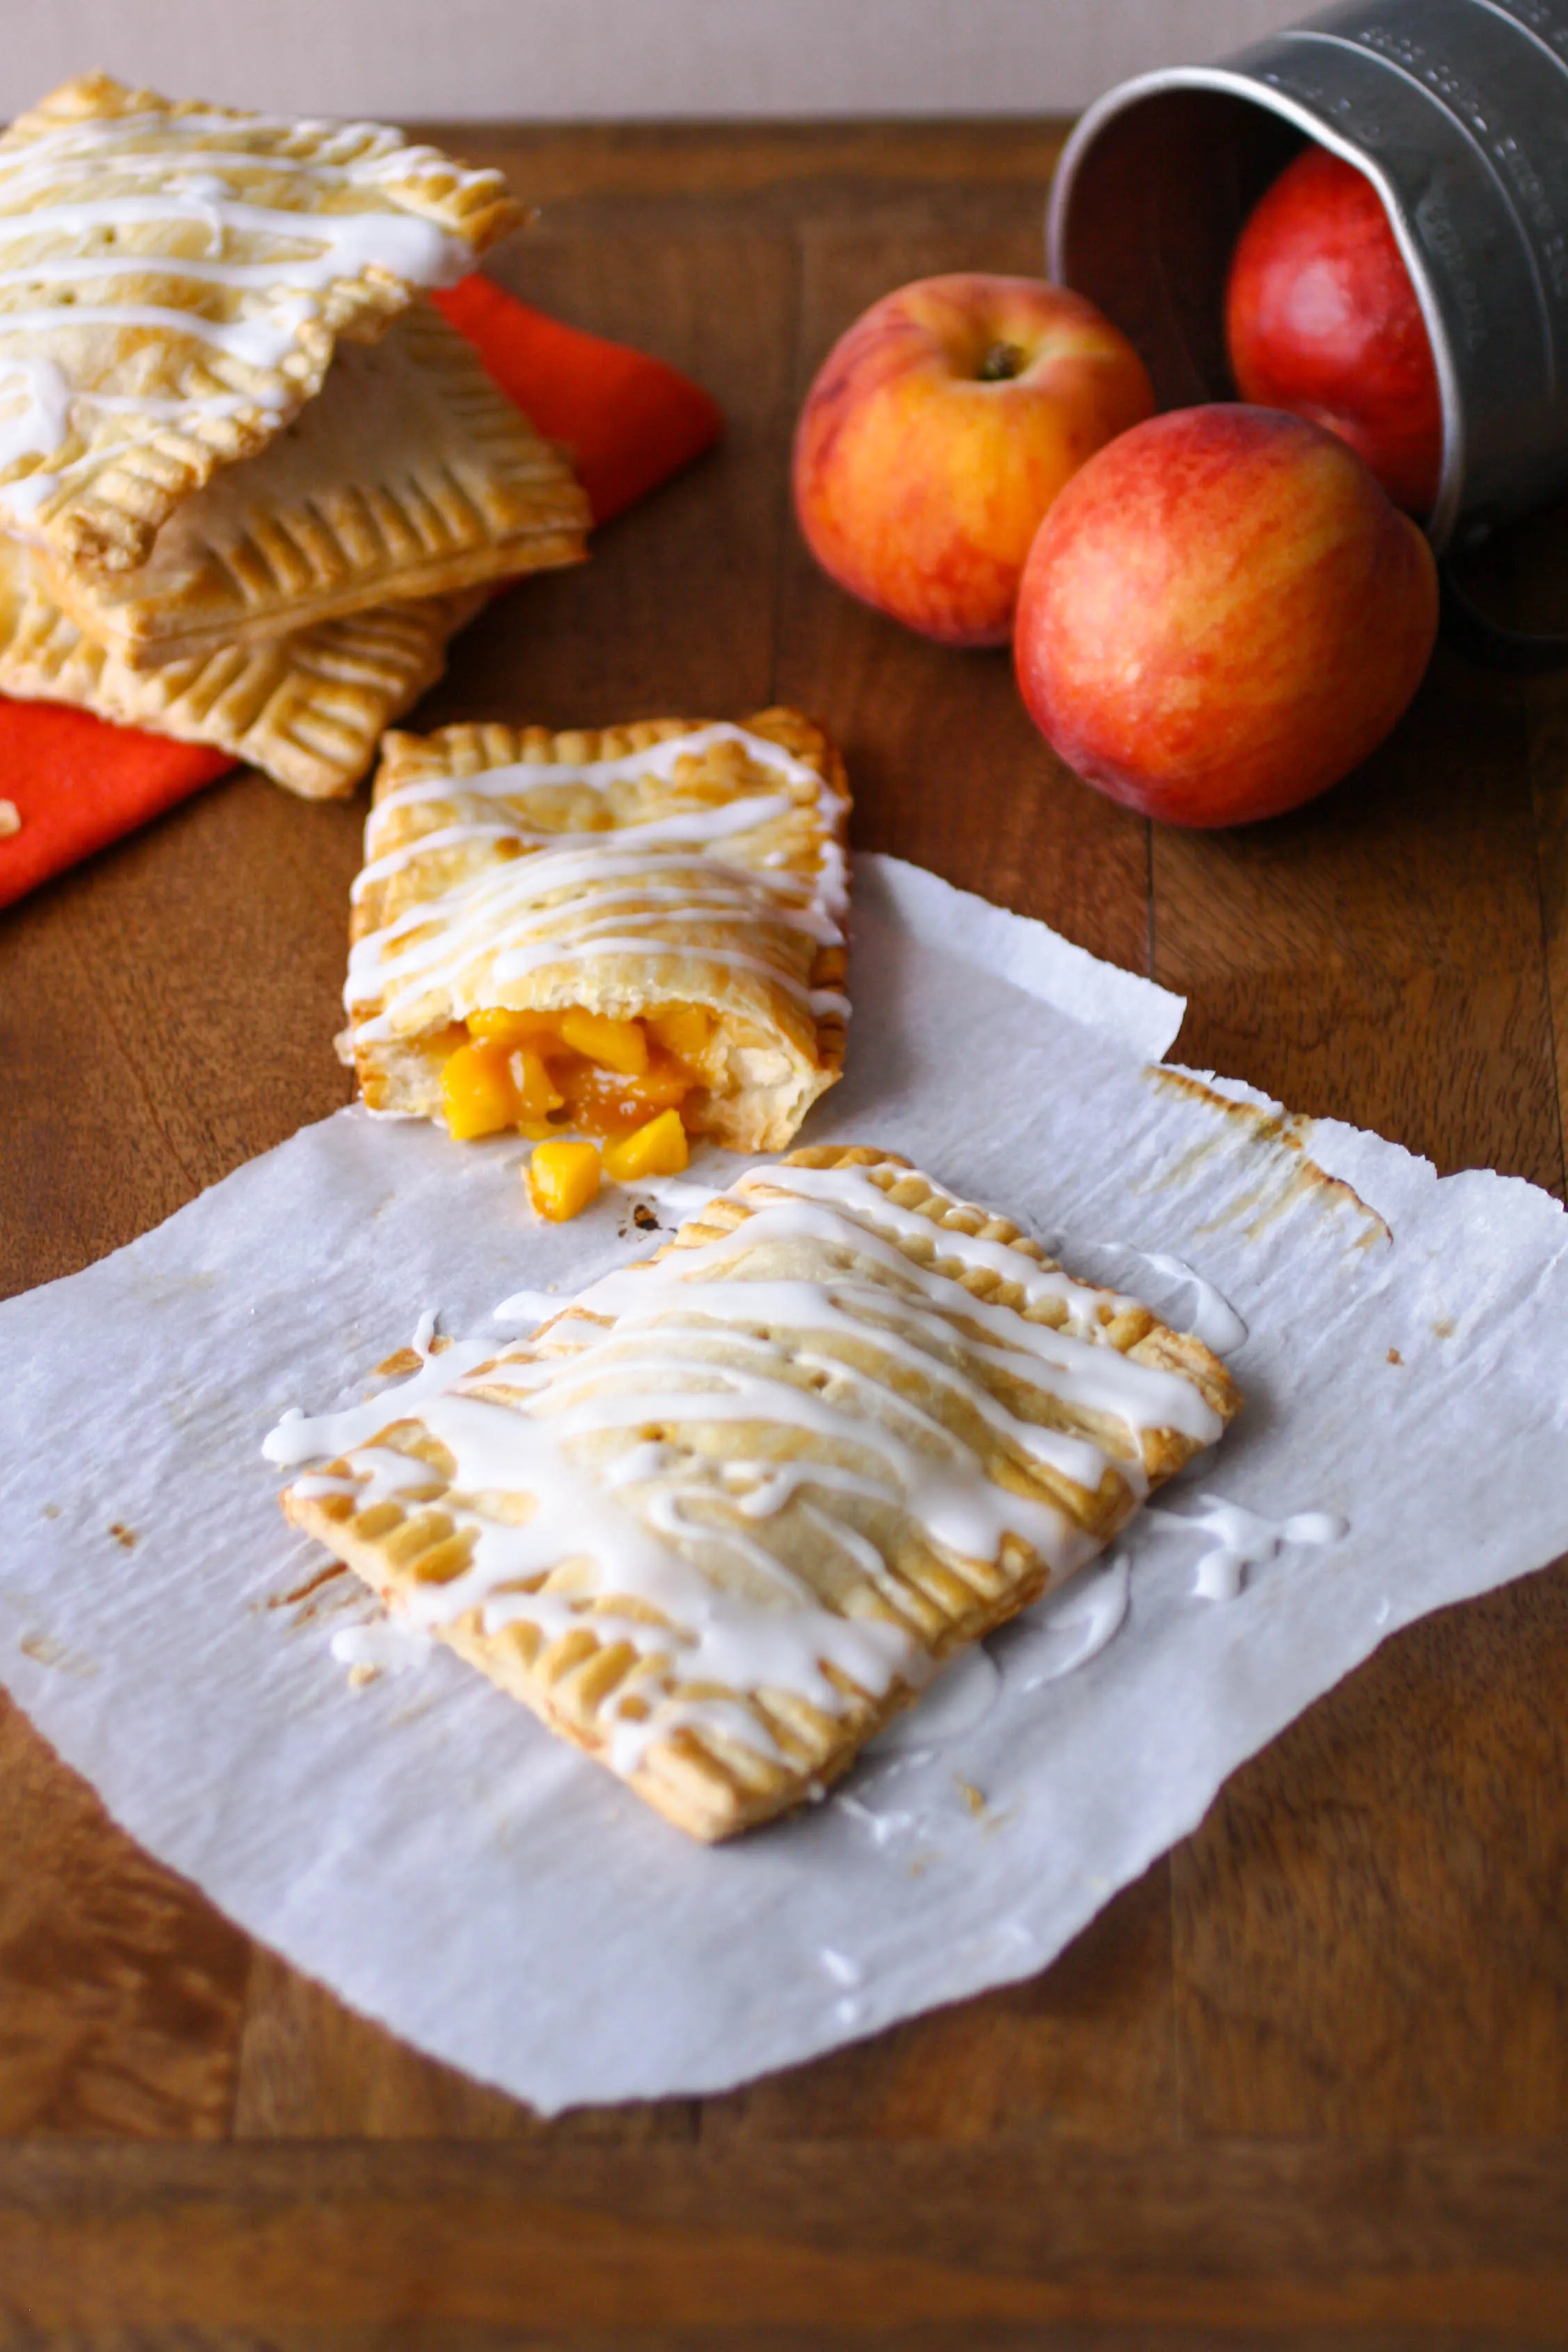 Fresh Peach Pie “Pop Tarts”  are a fun treat! Homemade is always best!